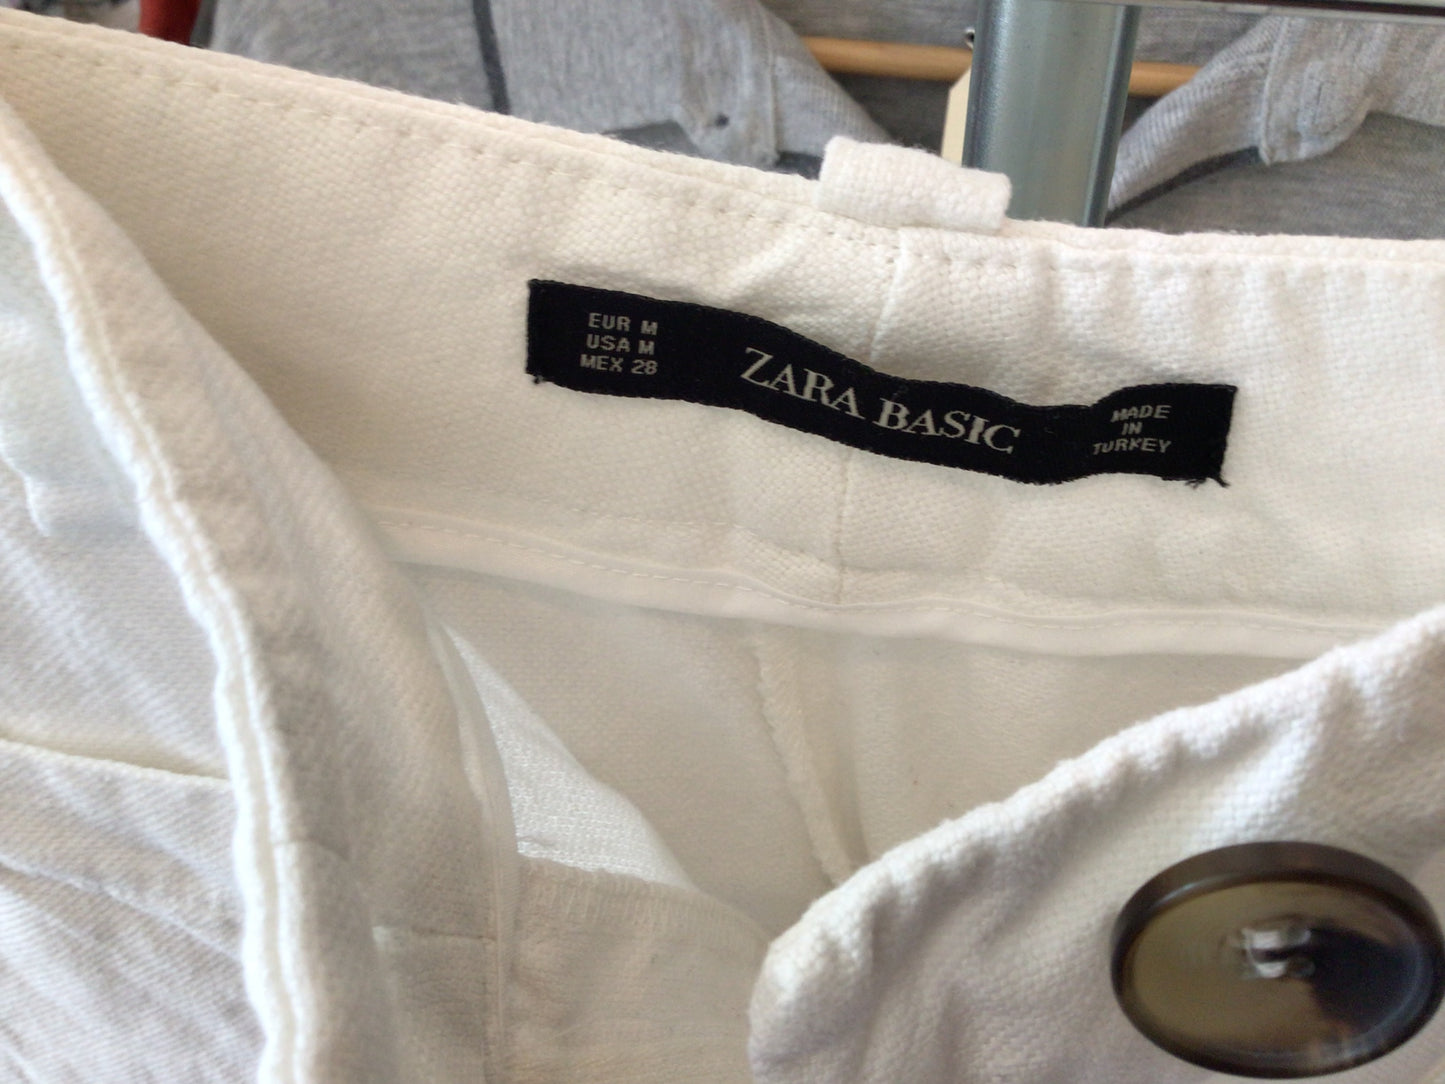 Consignment 7128-18	Zara basic. White pants. Sz.28